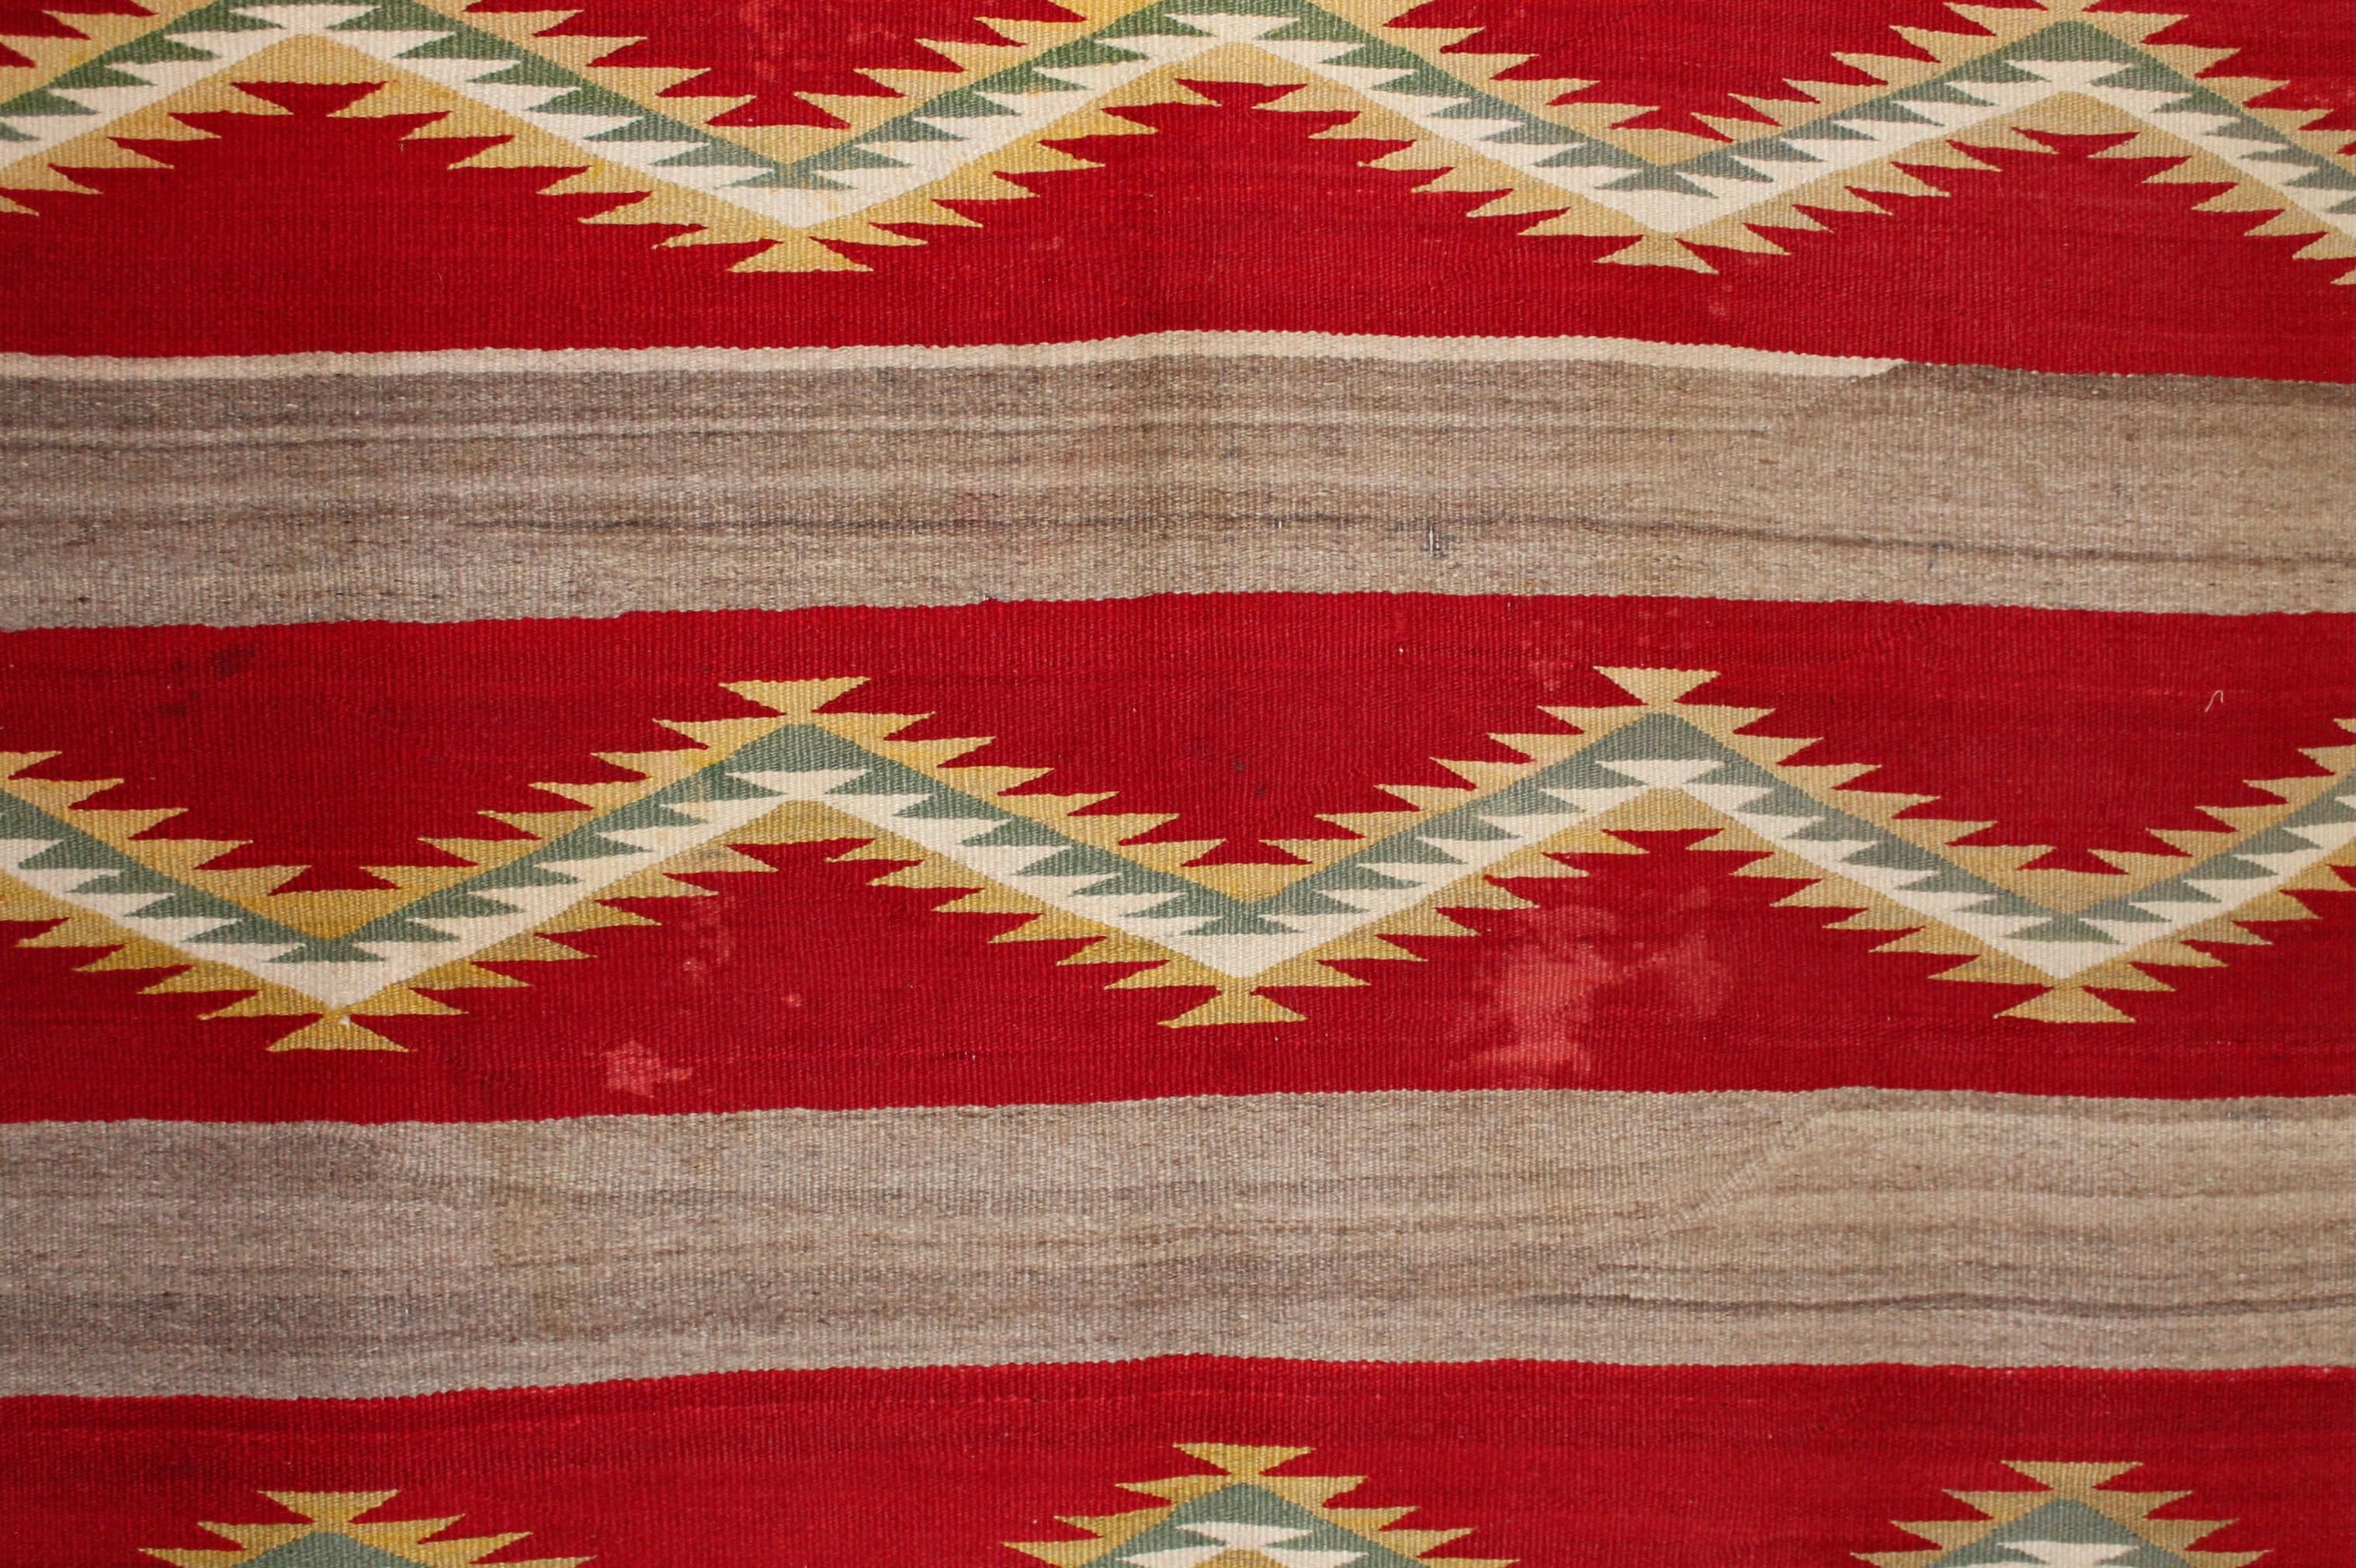 Navajo Transitional Blanket, circa 1880-1900 9